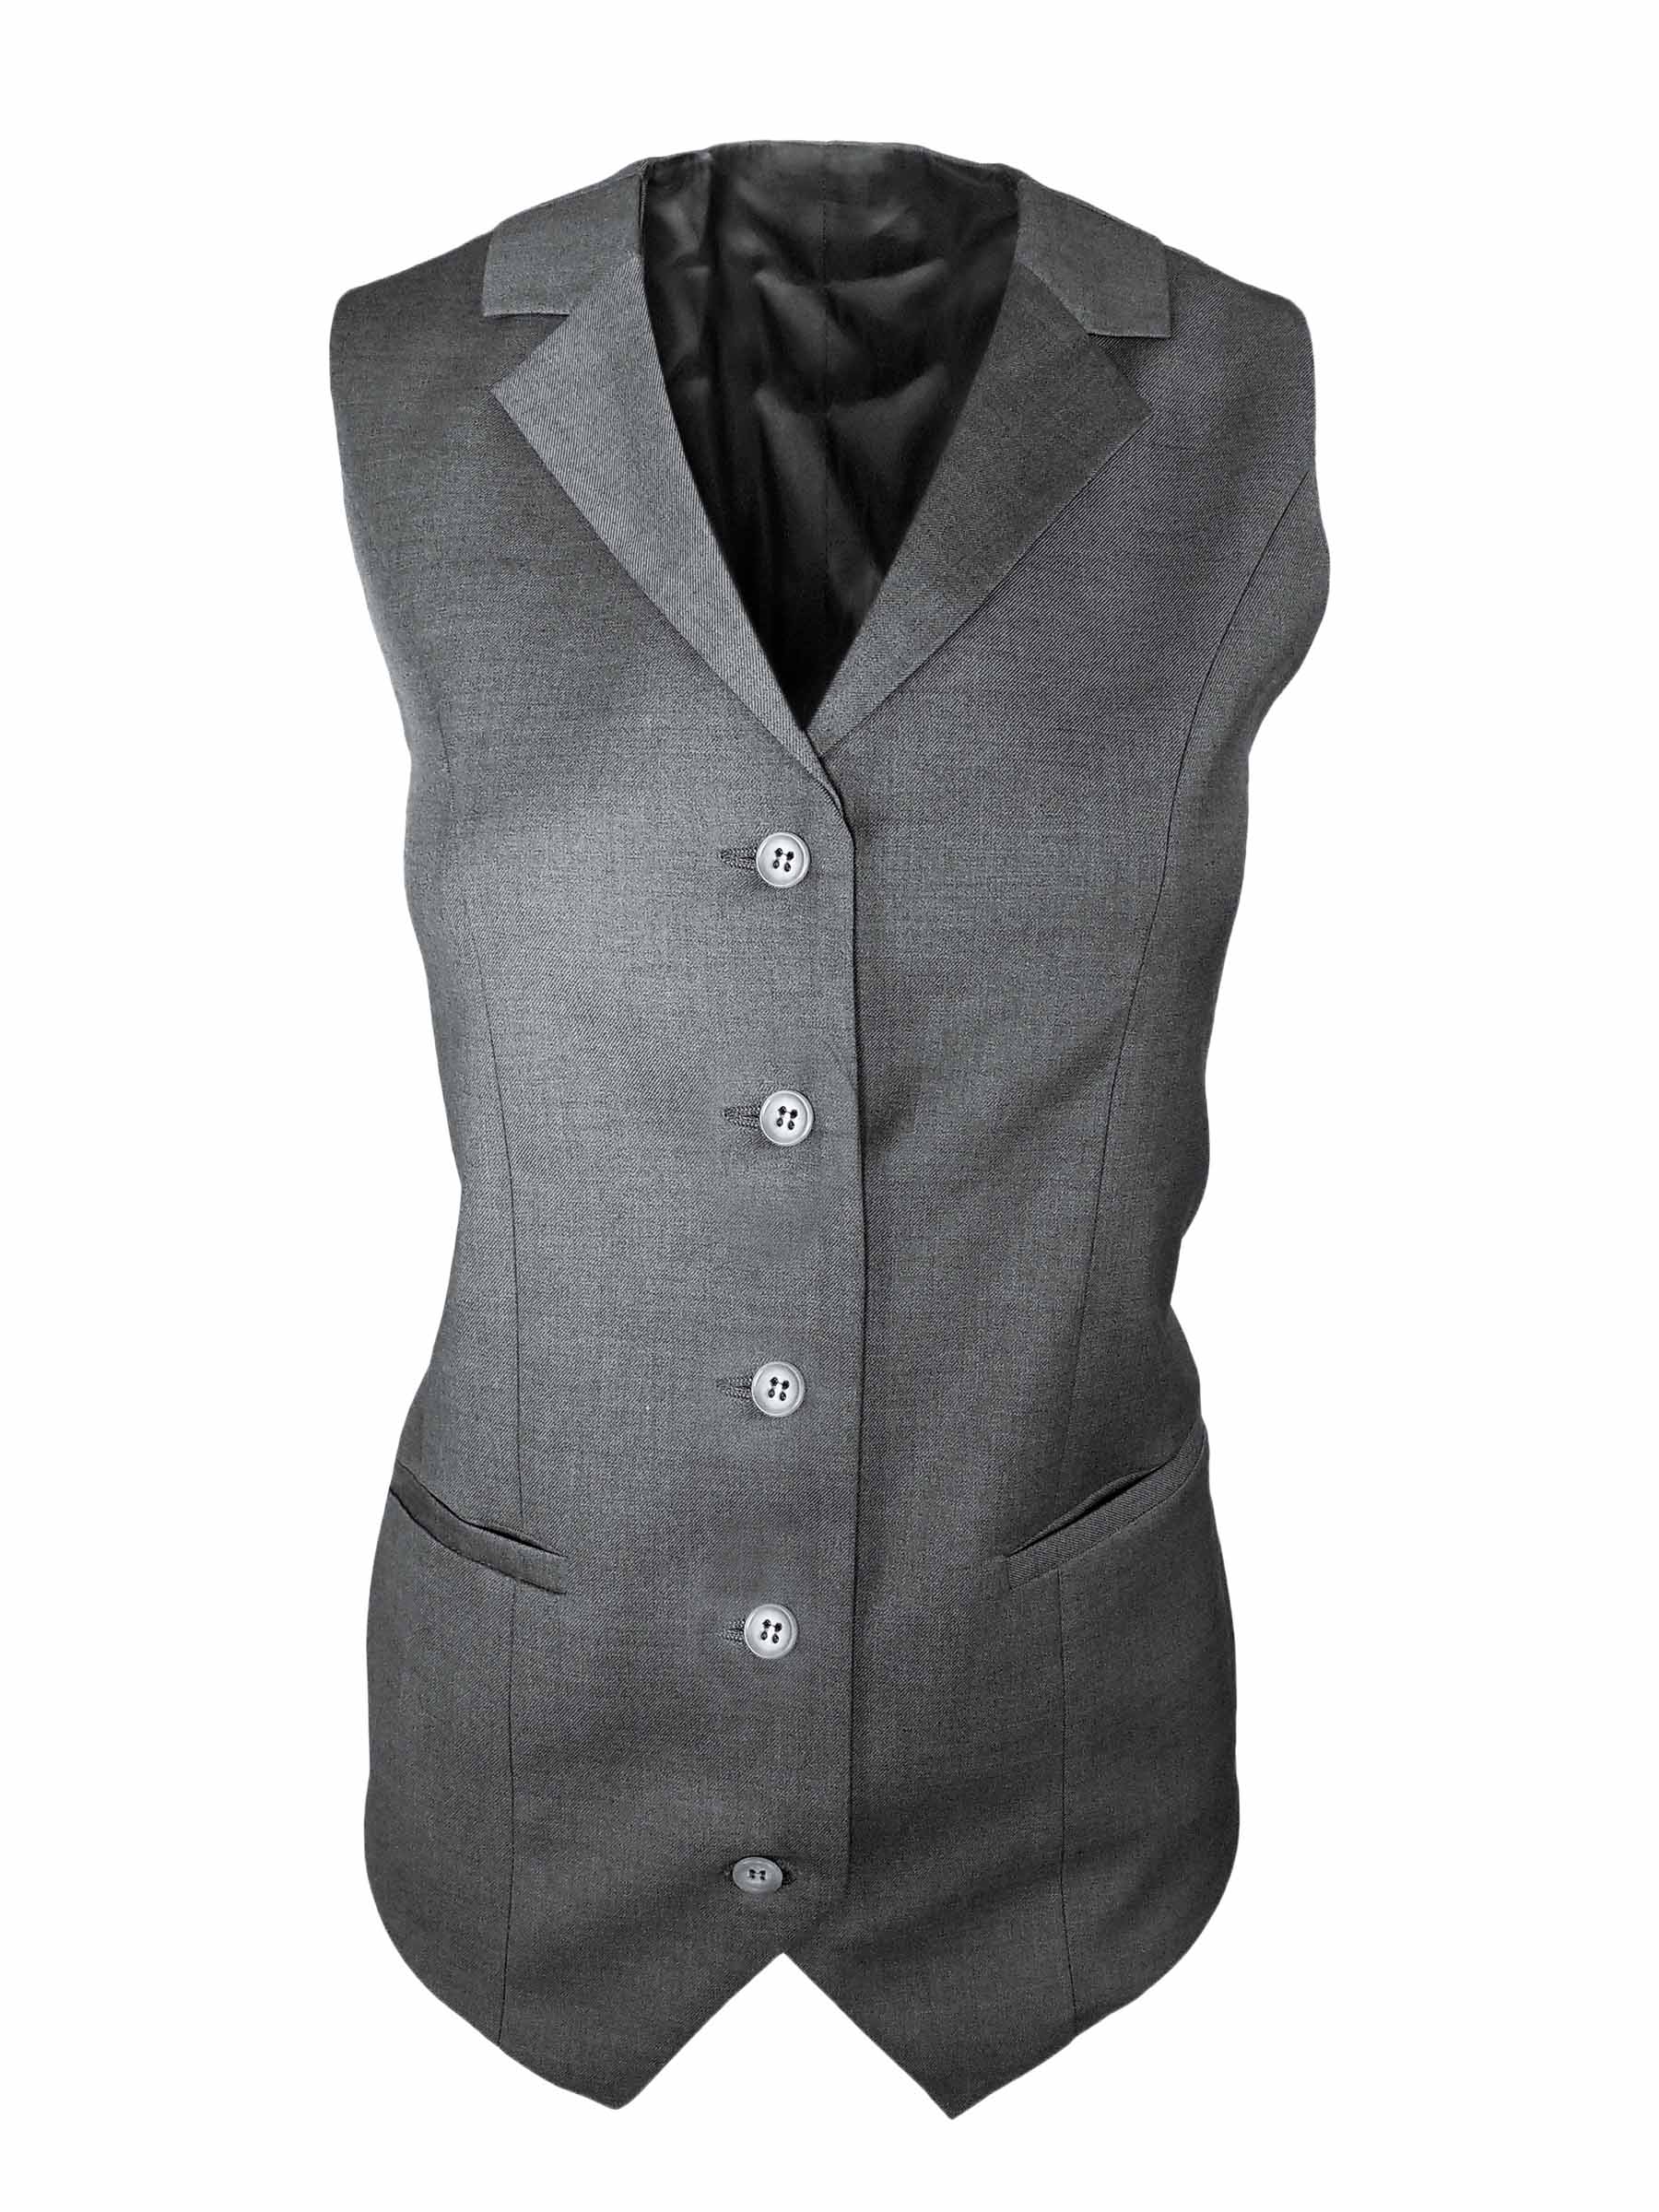 Women's Collared Vest - Light Grey Wool Blend - Uniform Edit